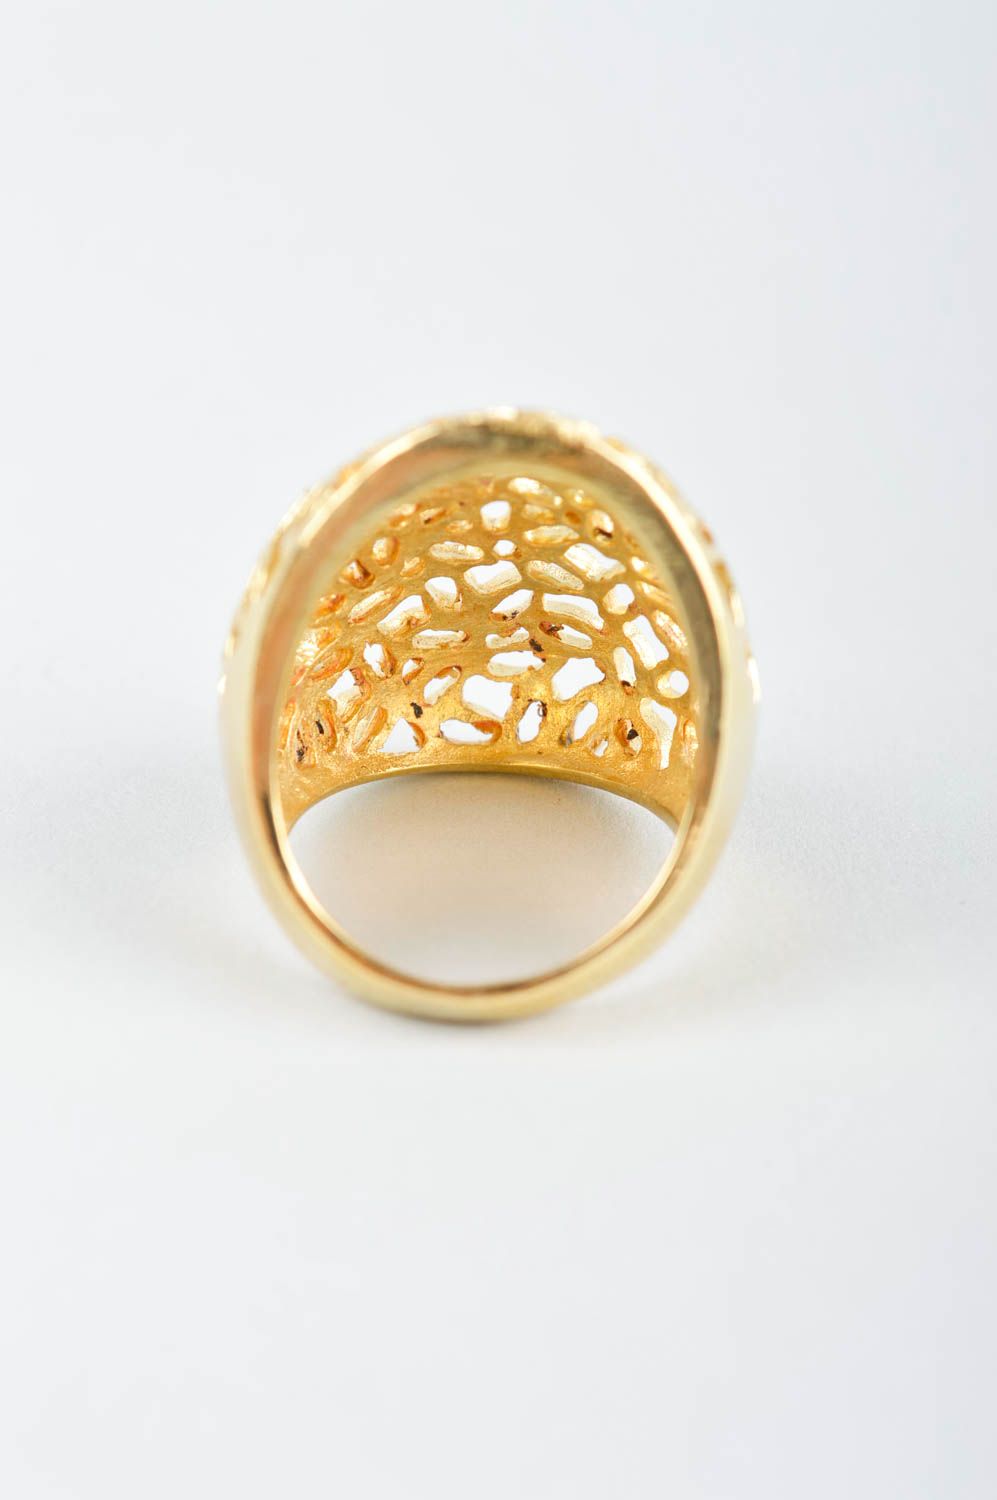 Unusual handmade metal ring homemade brass ring artisan jewelry designs photo 4